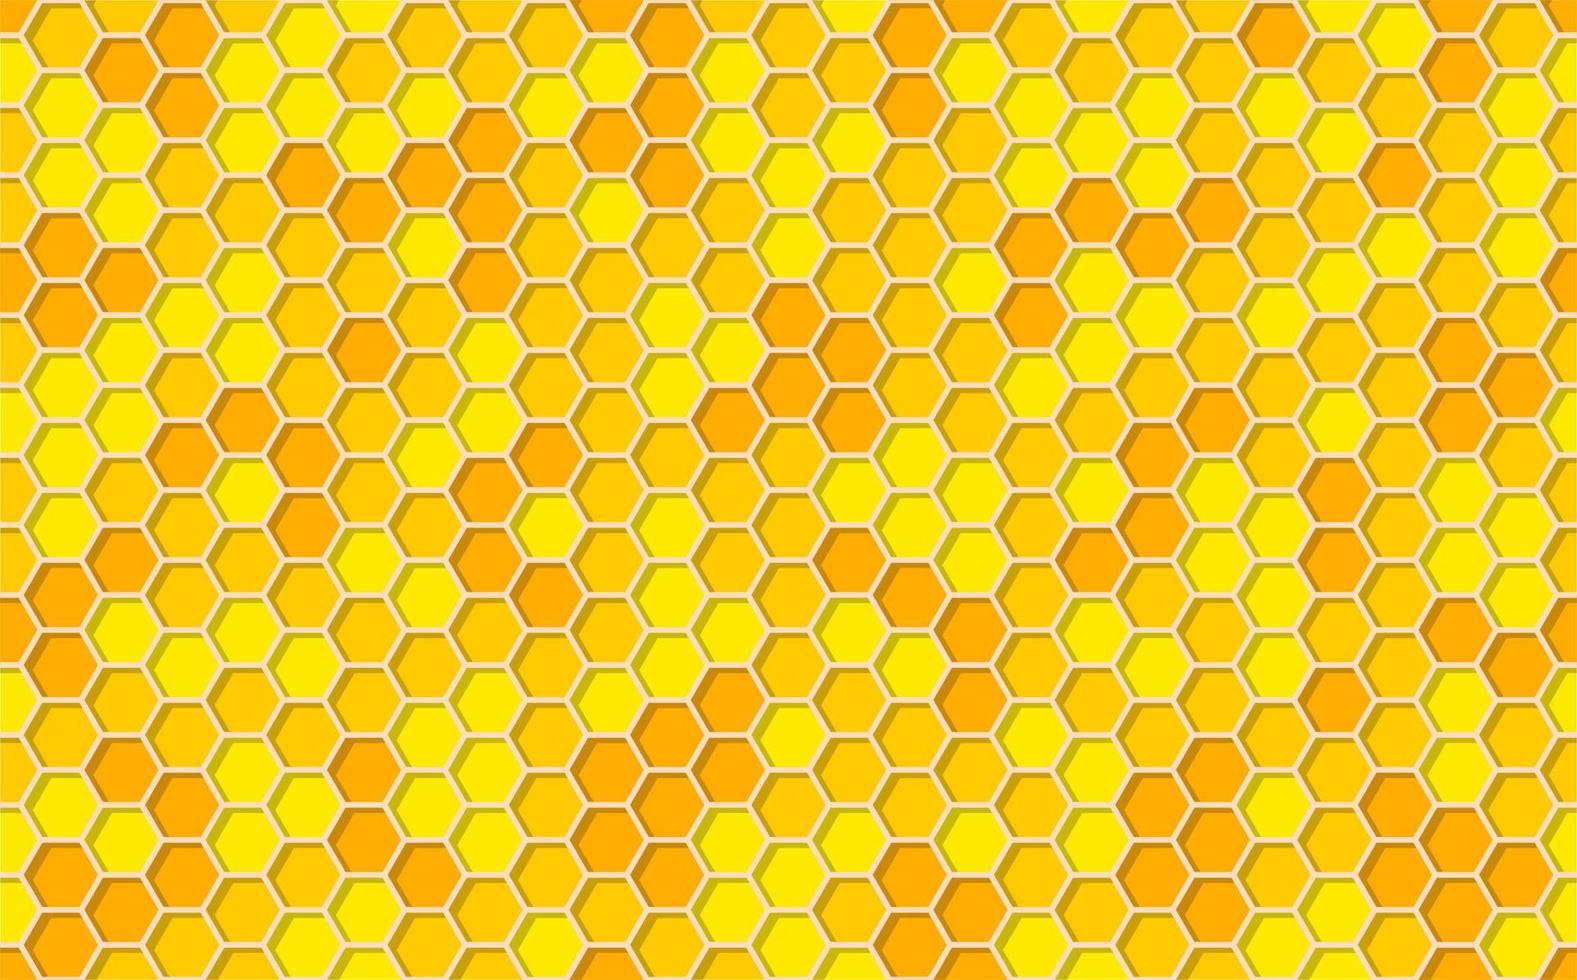 vaxkaka bakgrund. bikupa sömlös mönster. vektor illustration av platt geometrisk textur symbol. sexhörning, hexagonal raster, tecken eller mosaik- cell ikon. honung bi bikupa, gyllene orange gul.